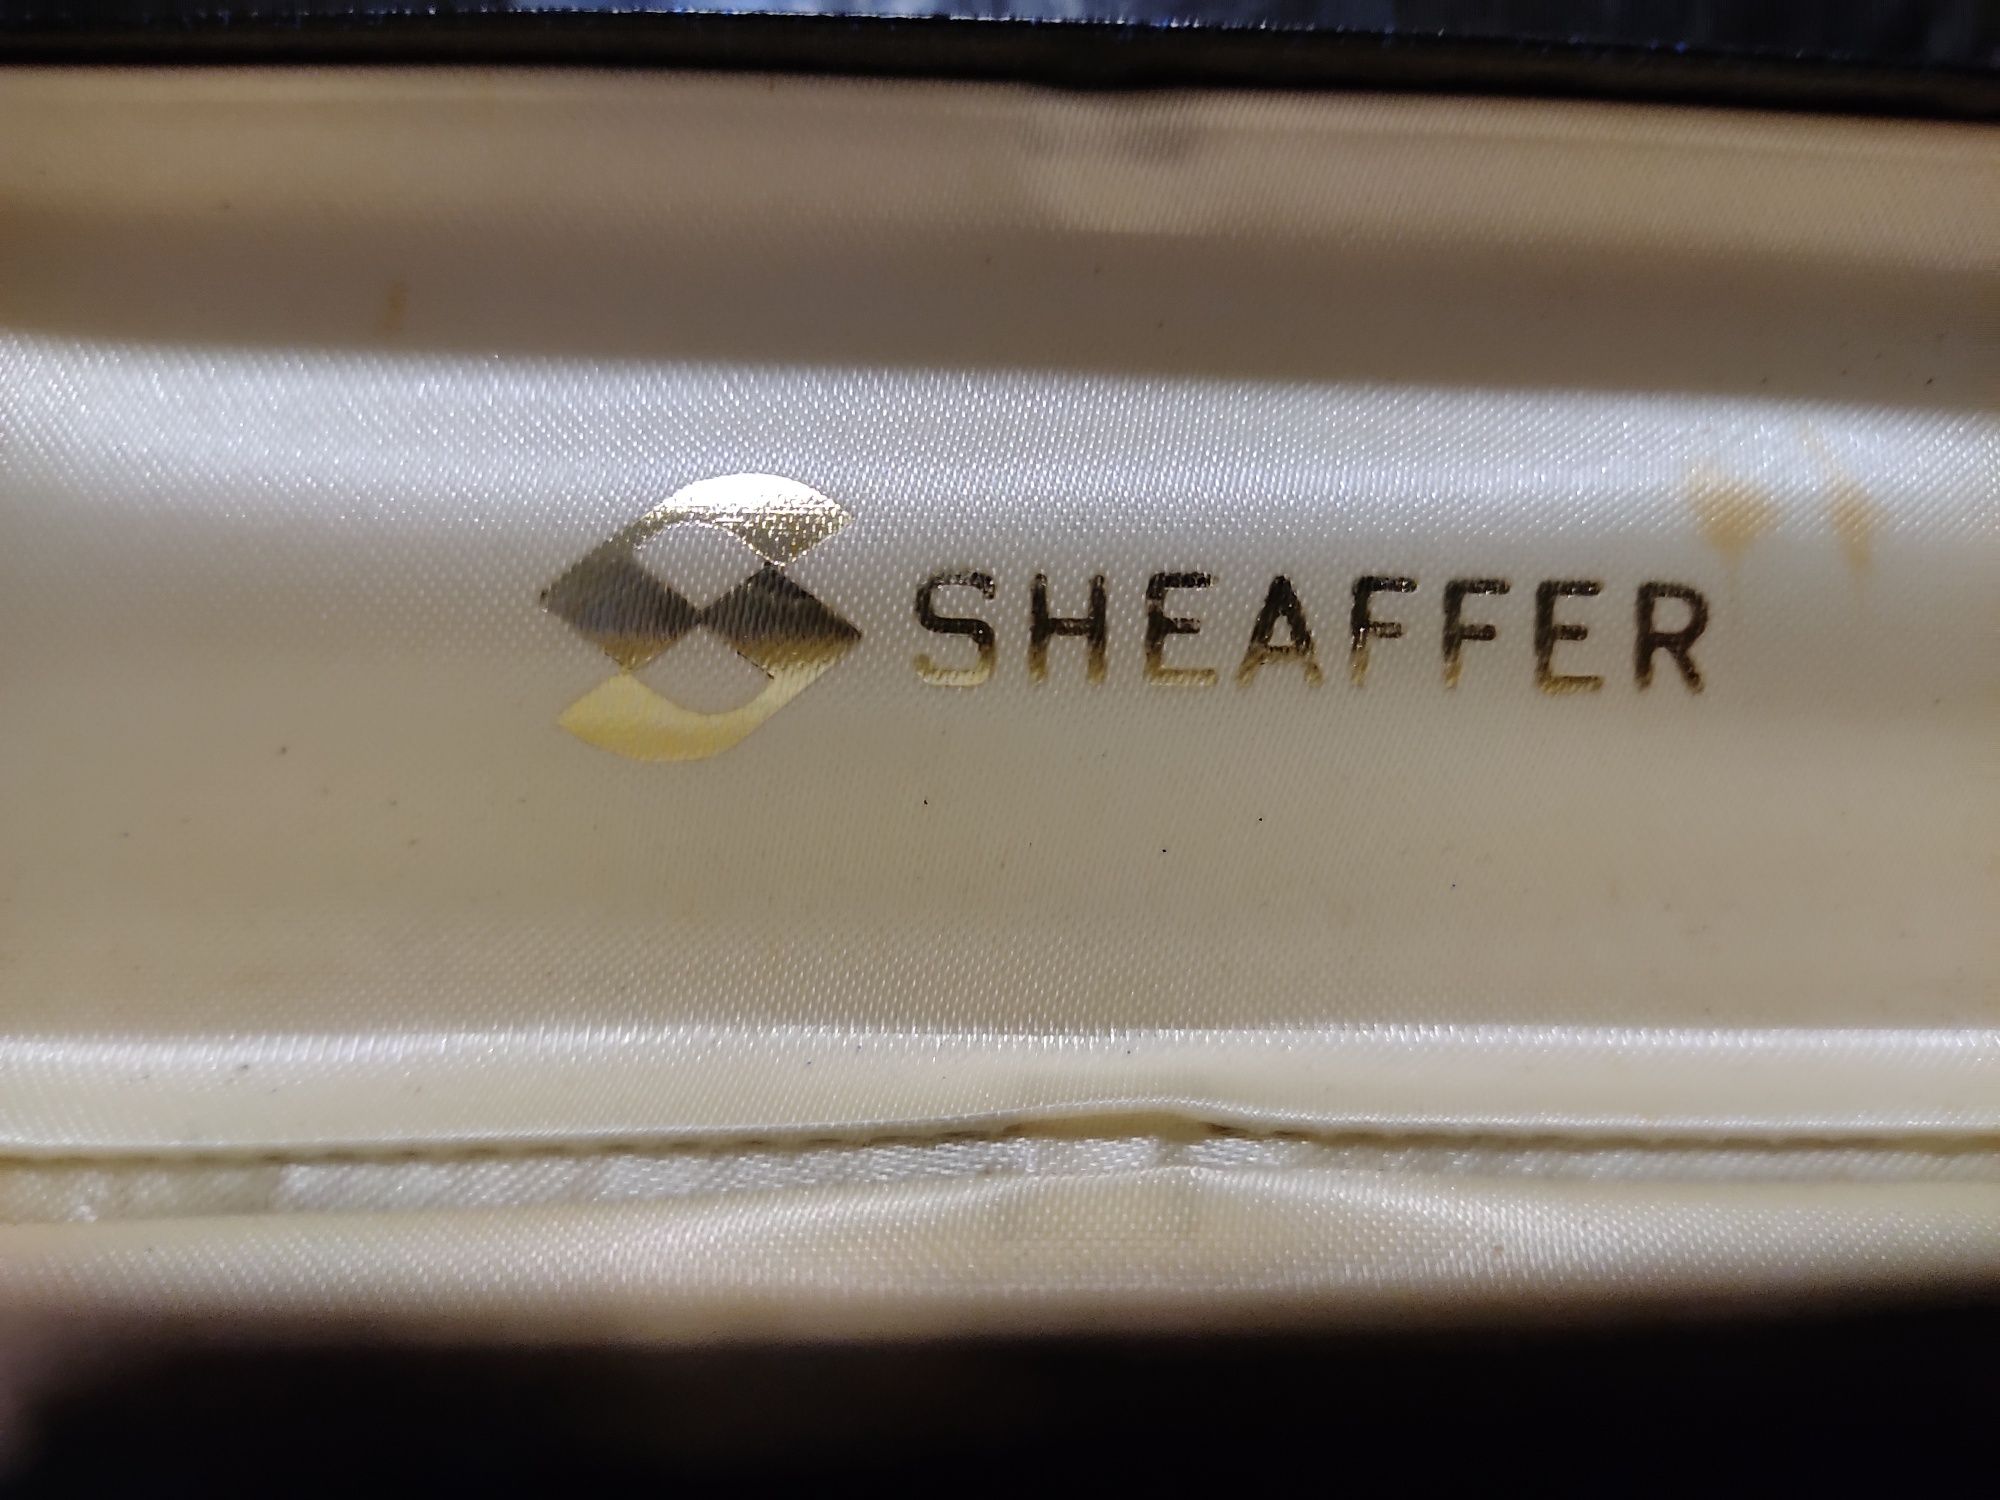 Caixa SHEAFFER vintage.